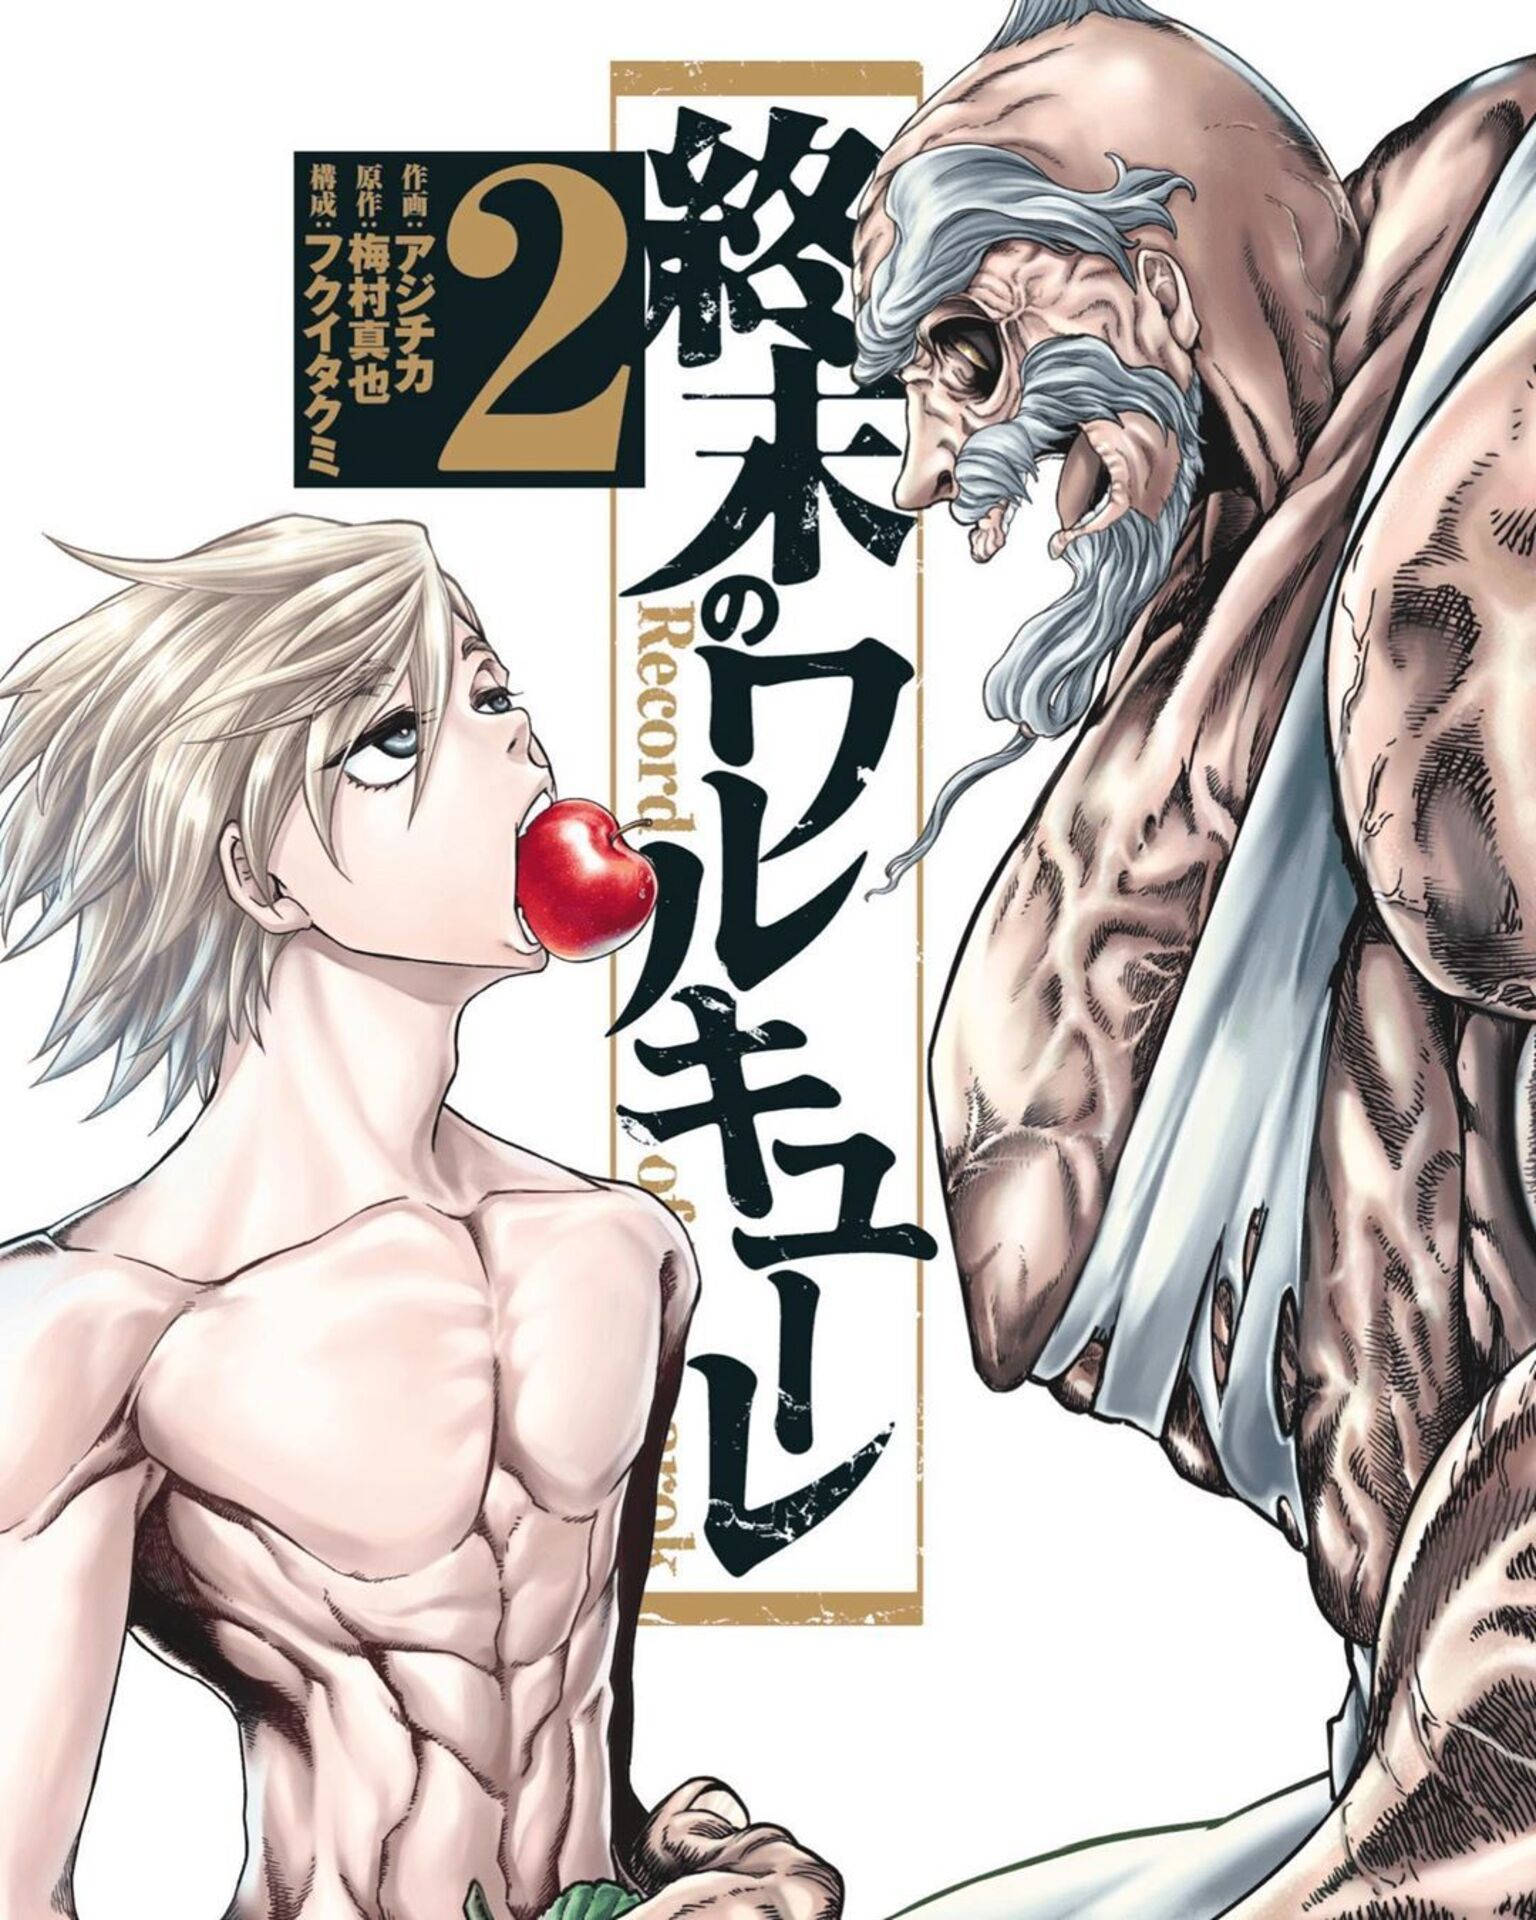 Zeus Vs Adam Record Of Ragnarok Manga Cover